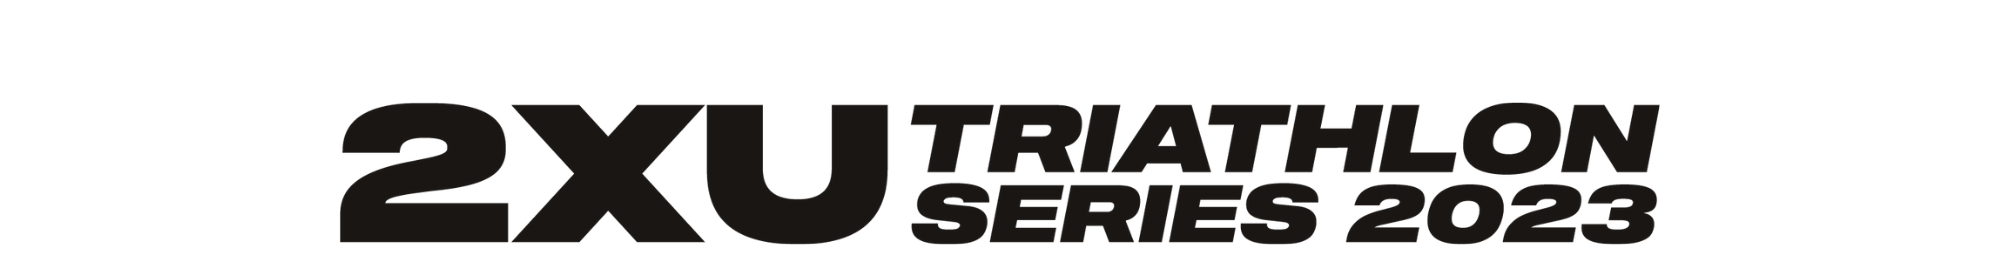 2XU Triathlon Series 2023